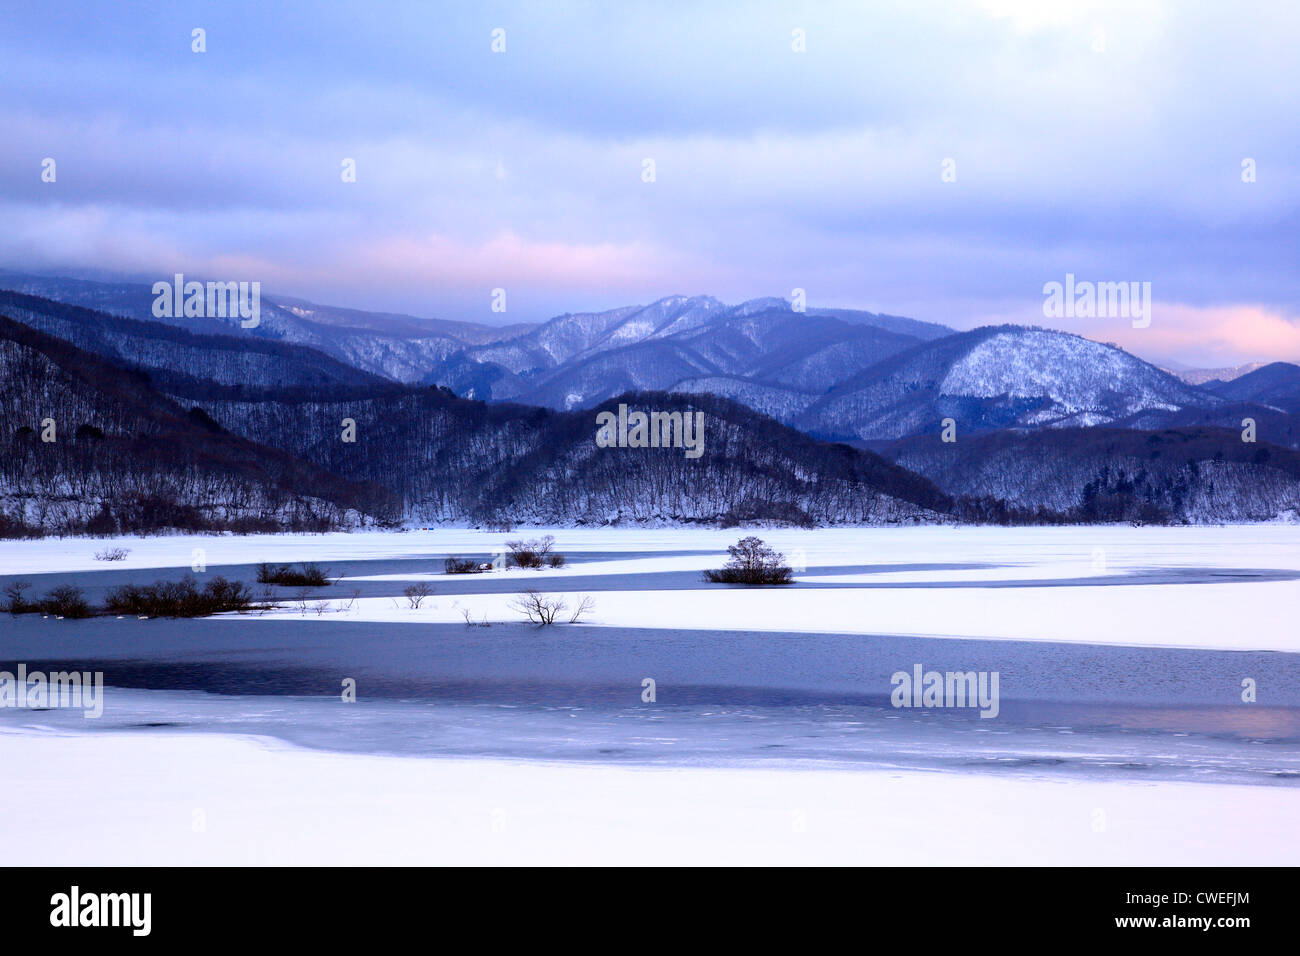 Beautiful Scenery Of Frozen Lake And Mountain Ranges Stock Photo